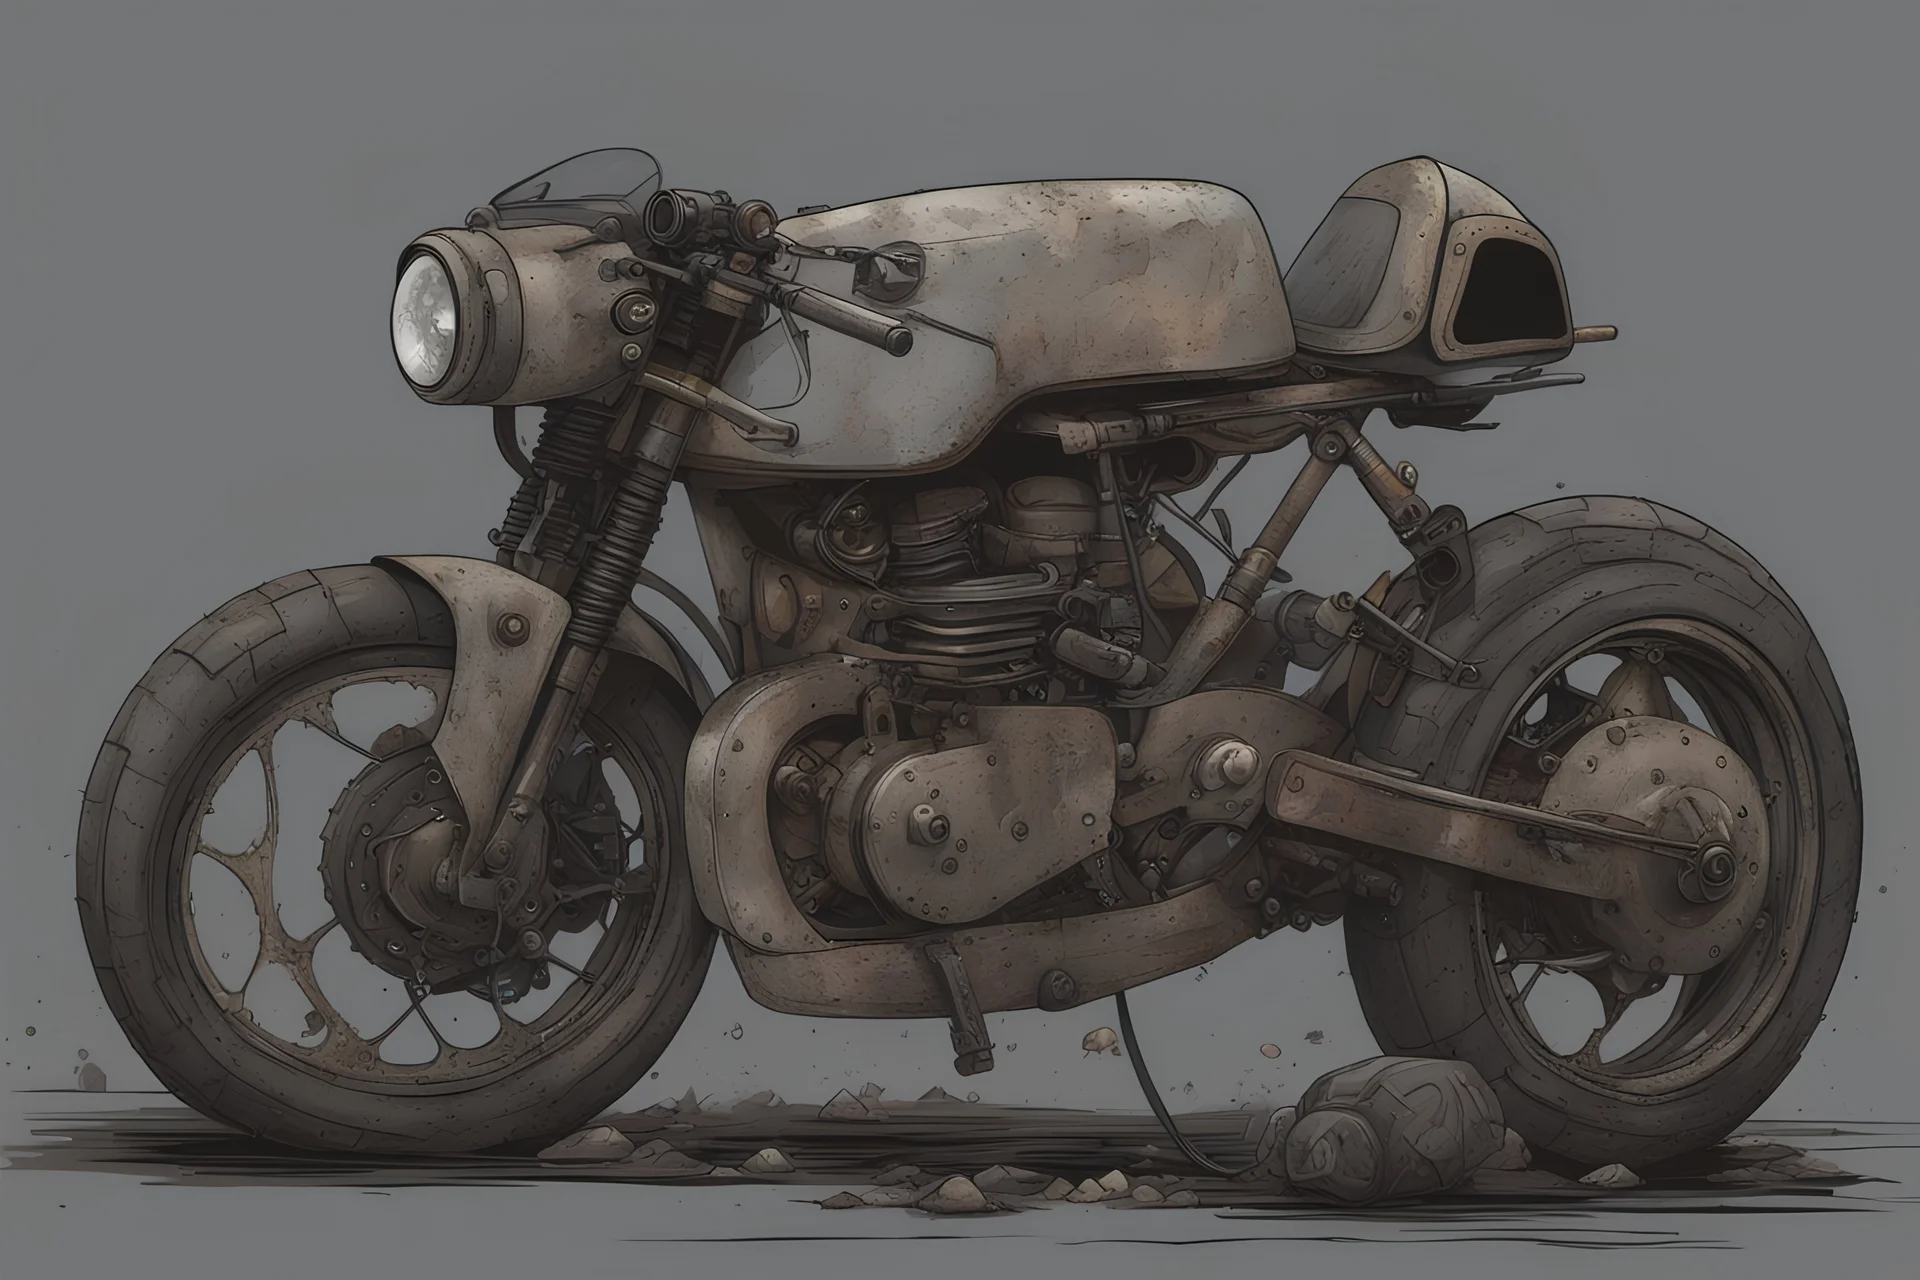 motorcycle, comic book,post-apocalypse, gray background,